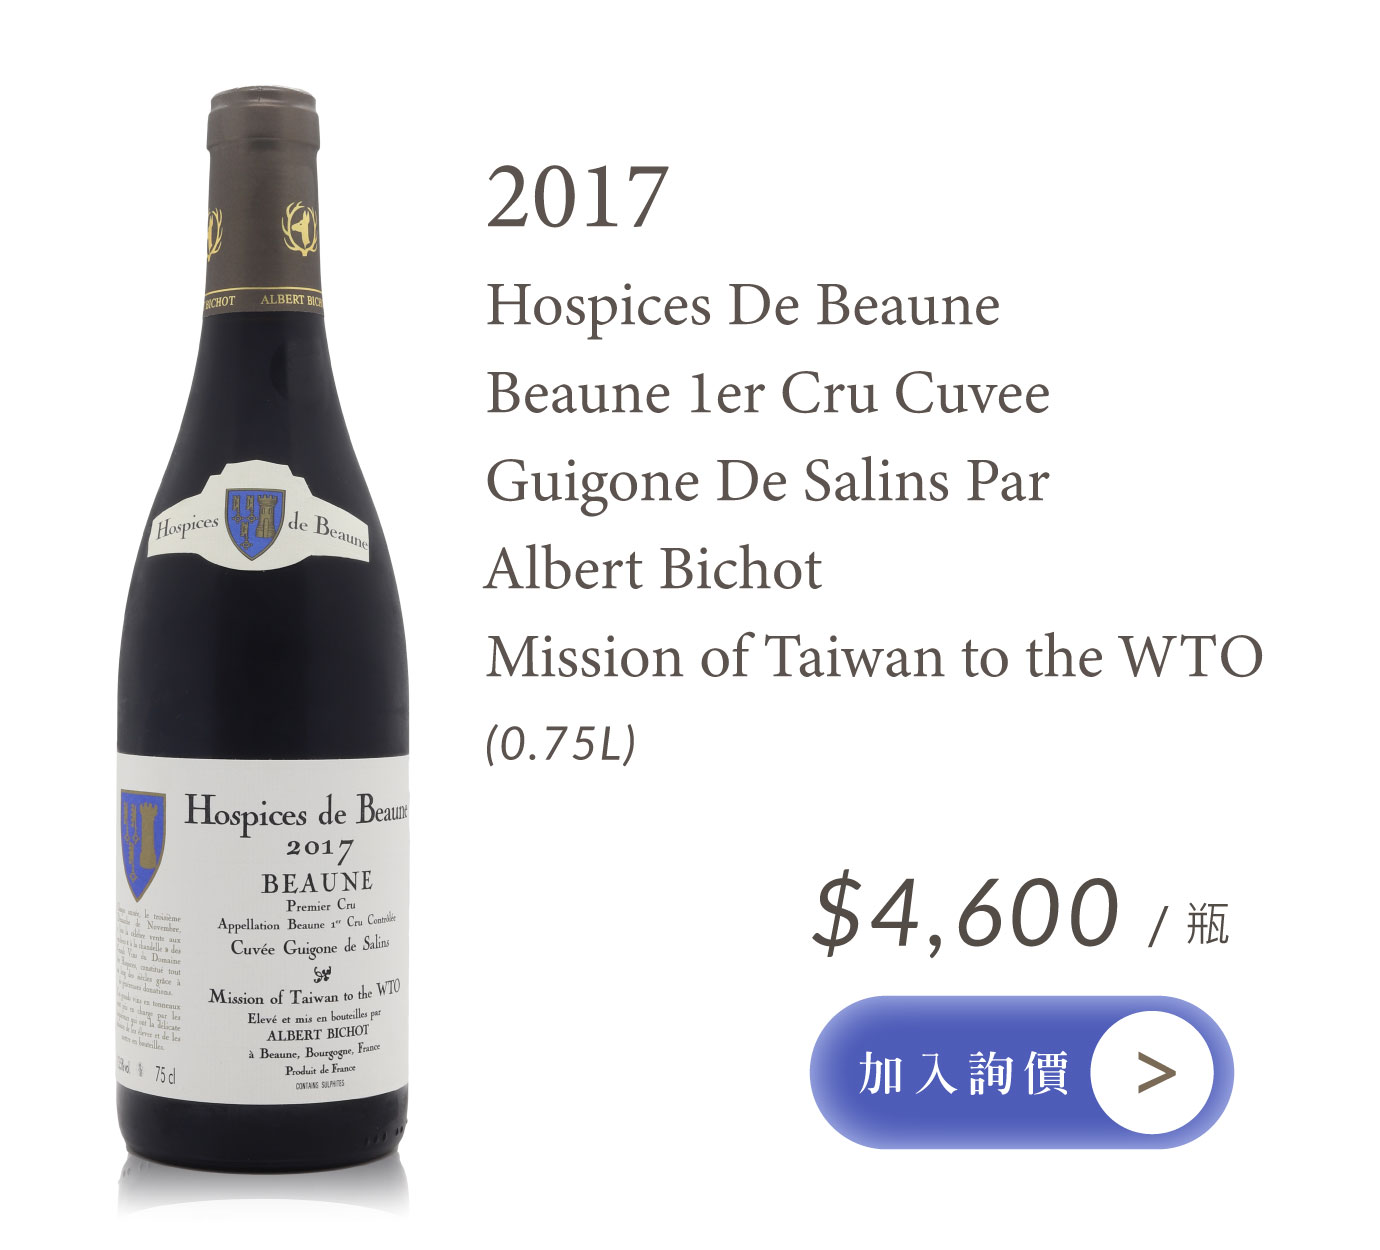 2017 Hospices De Beaune Beaune 1er Cru Cuvee Guigone De Salins Par Albert Bichot Mission of Taiwan to the WTO